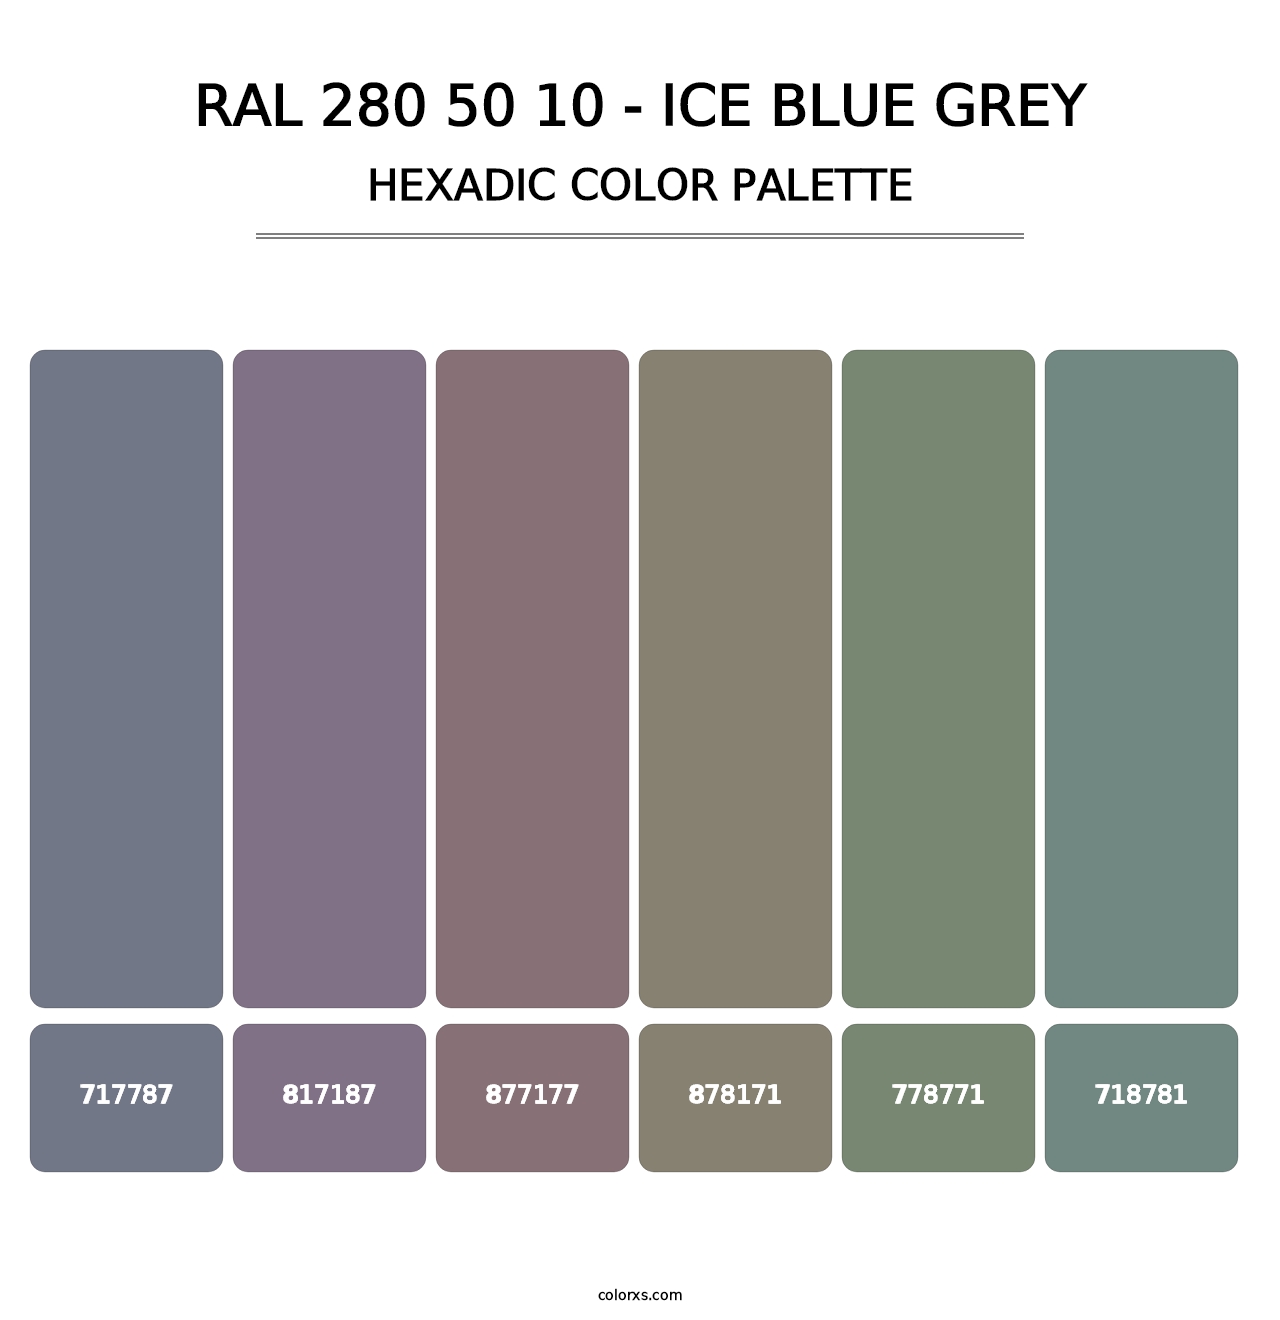 RAL 280 50 10 - Ice Blue Grey - Hexadic Color Palette